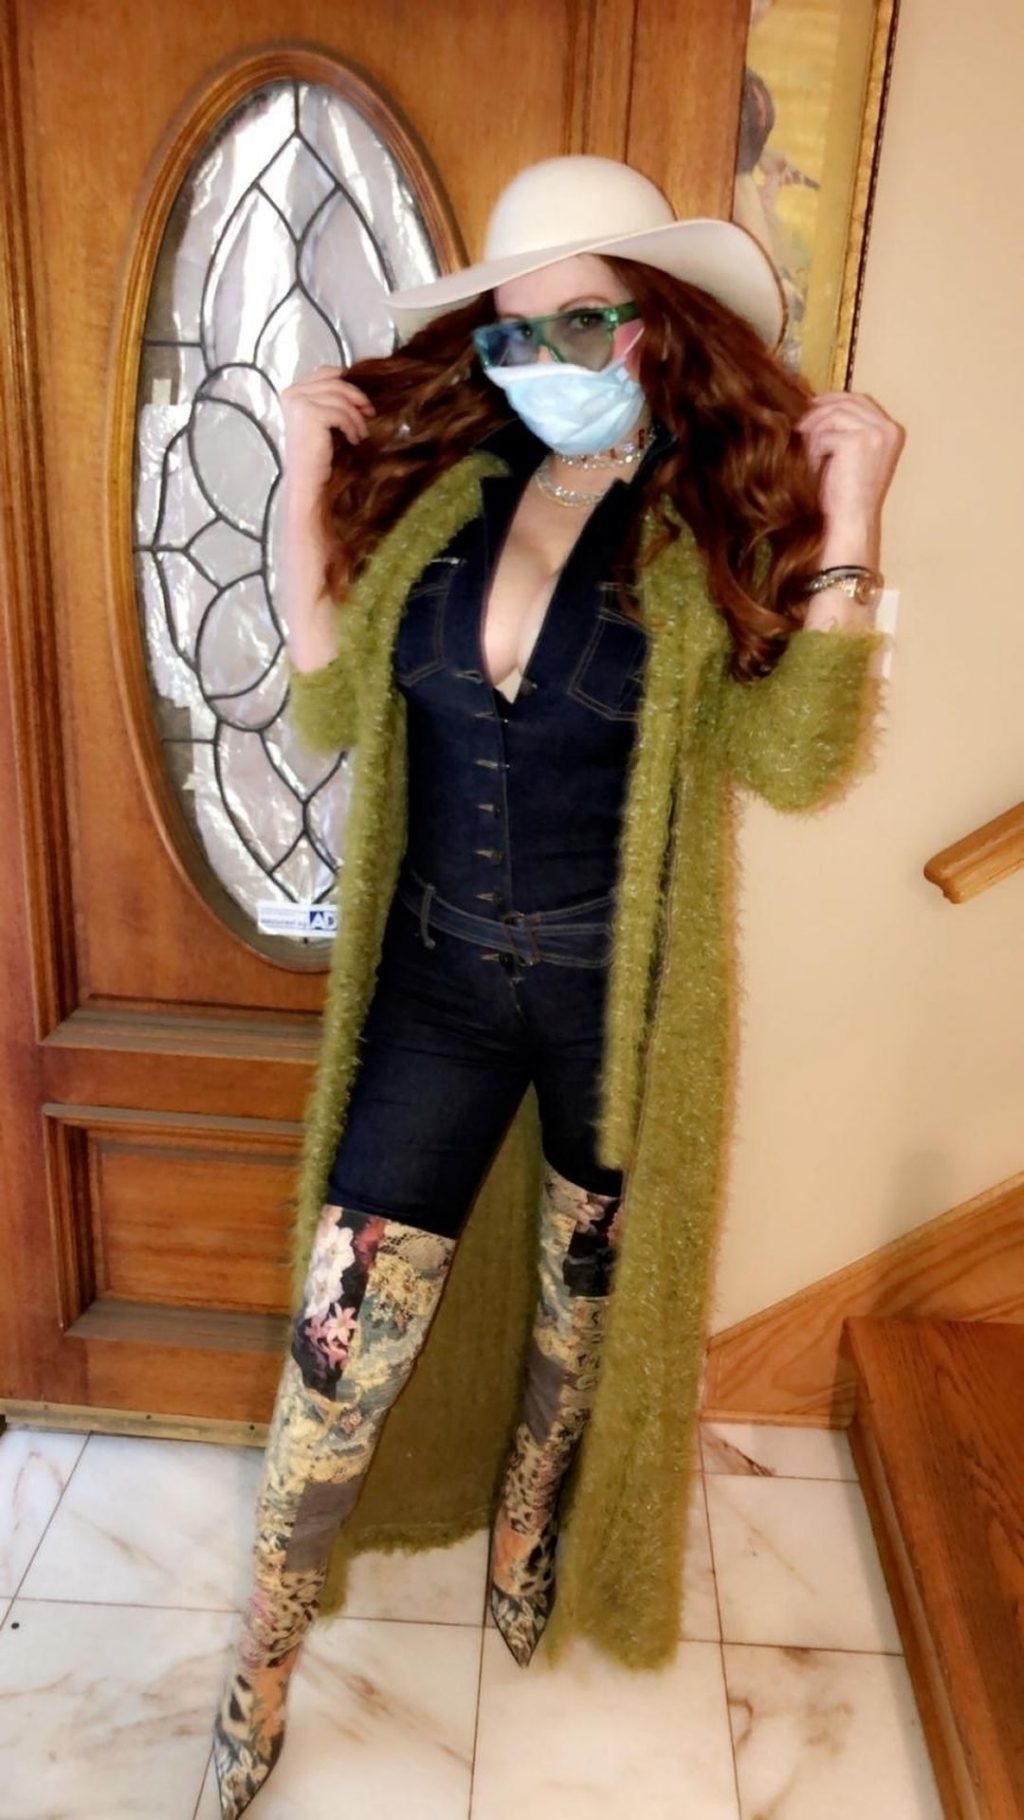 Phoebe Price Poses for Photos in her Coronavirus Mask (21 Photos)